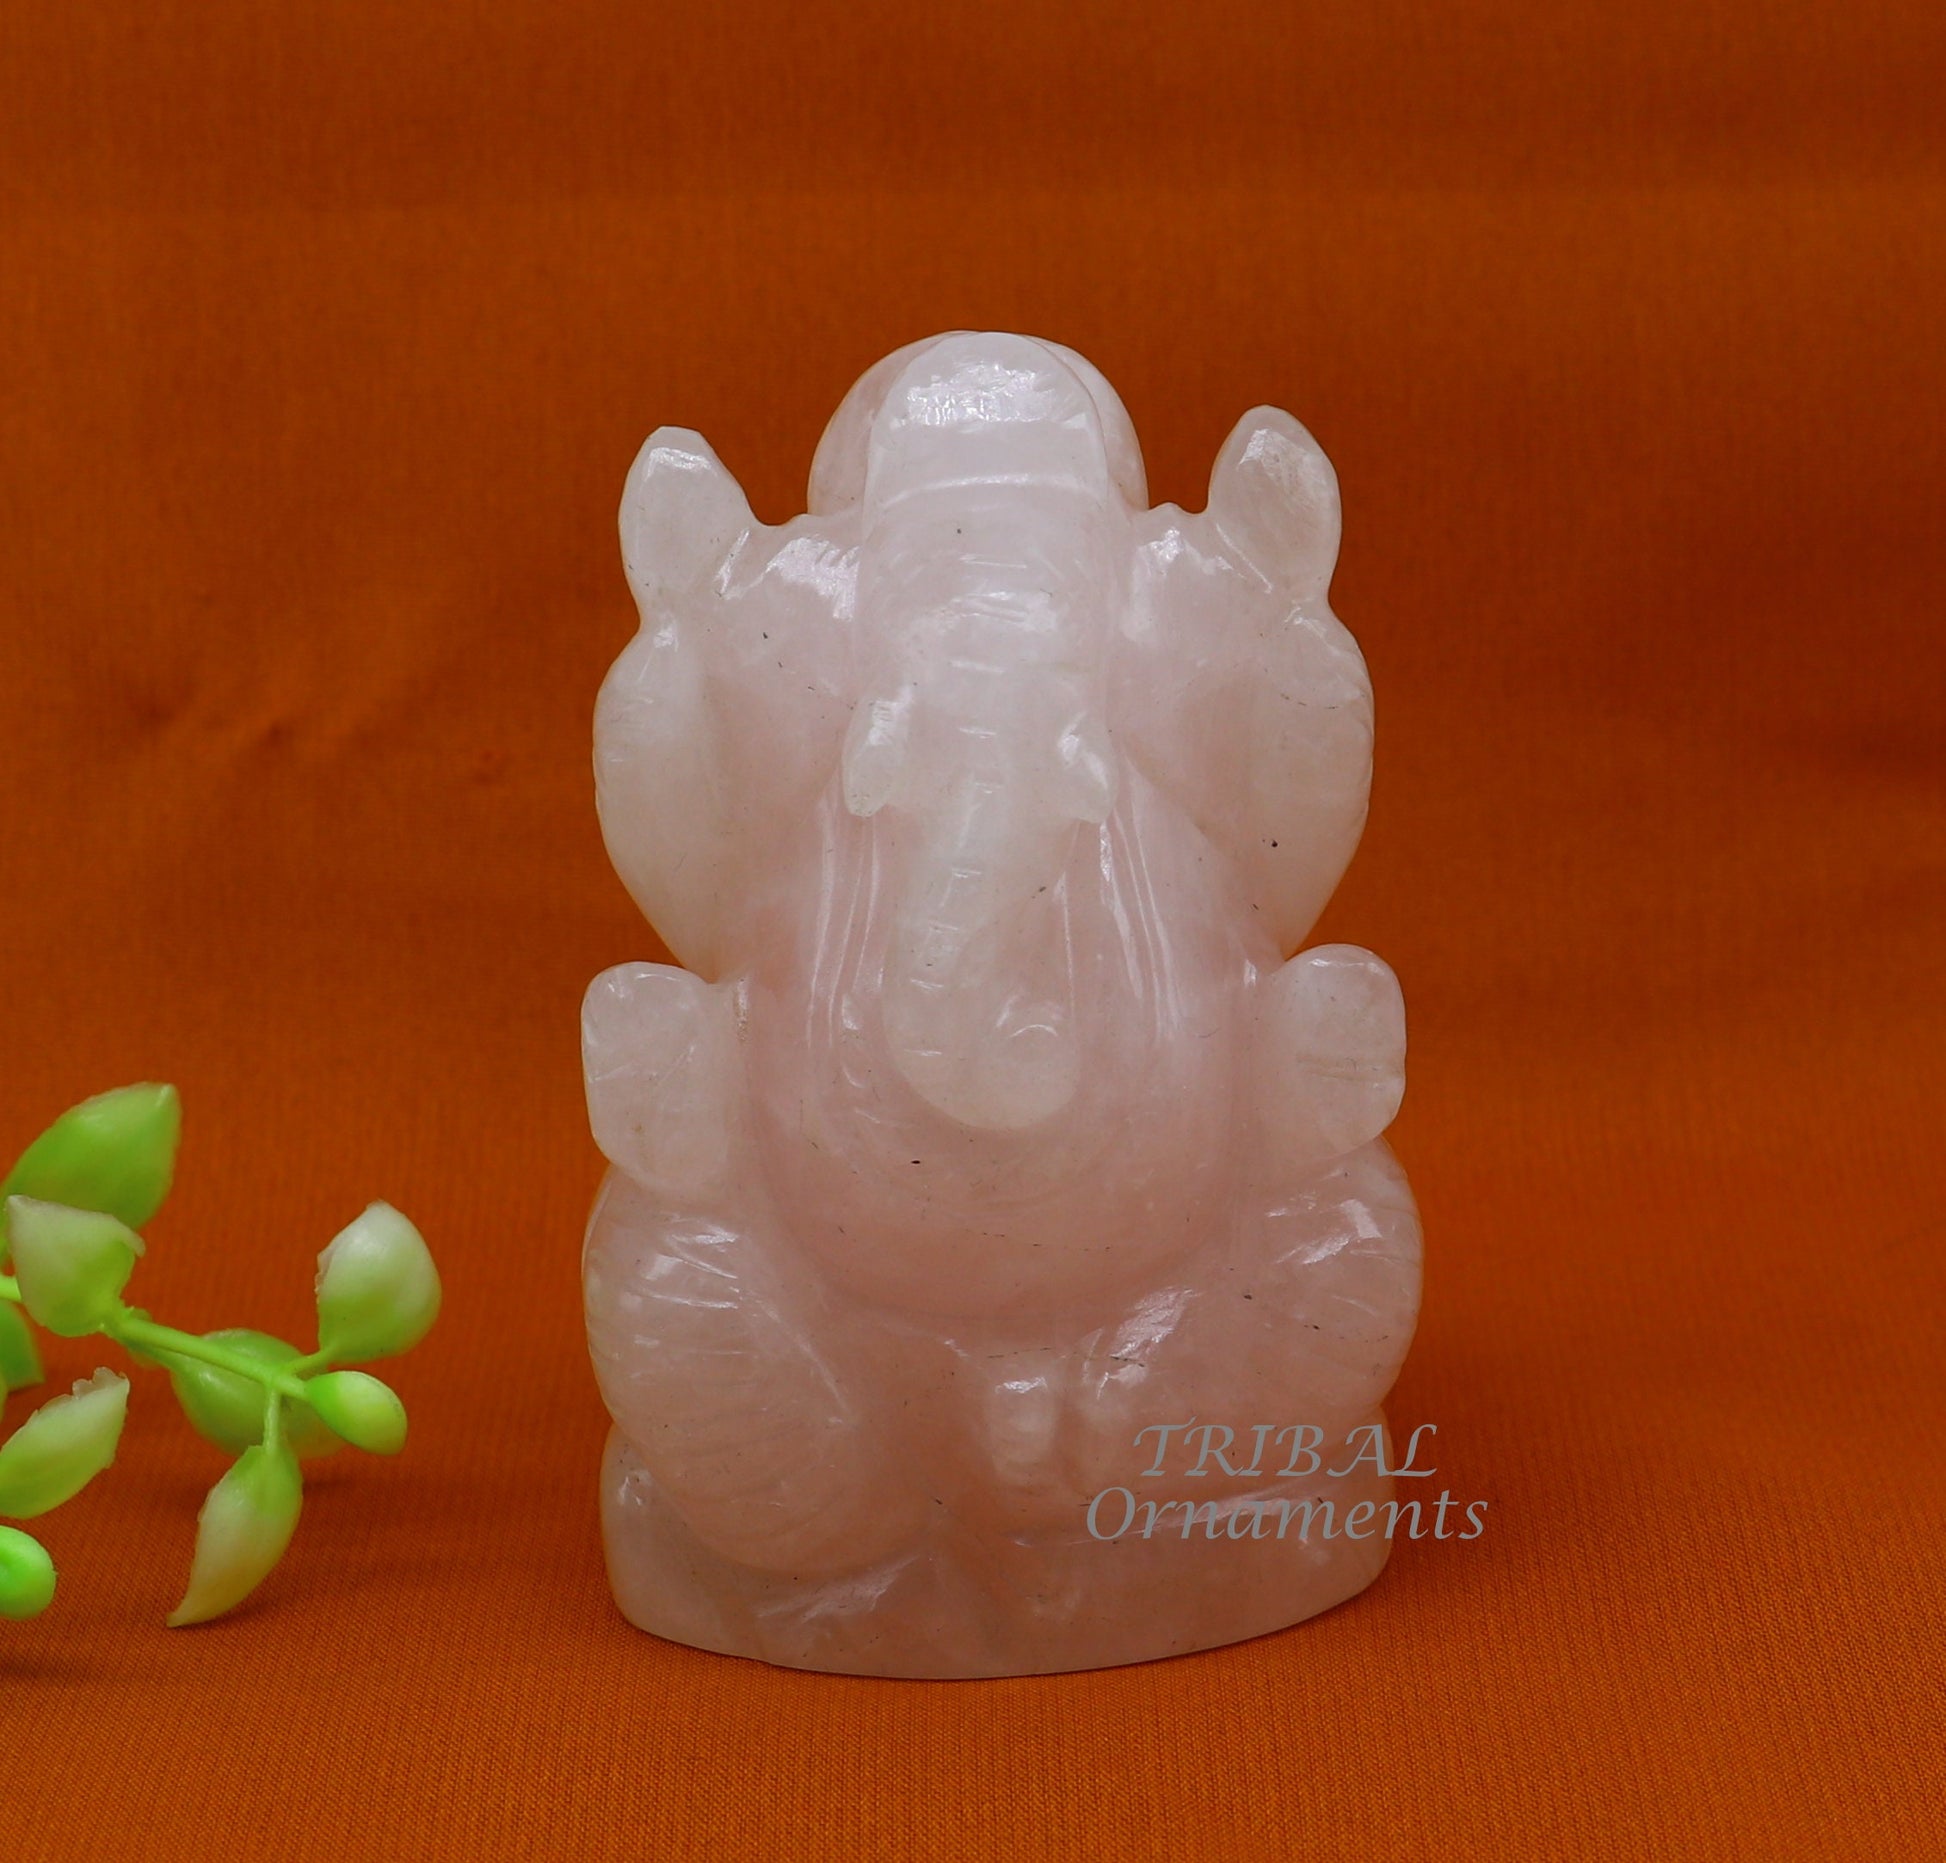 Idol Ganesha handcrafted Natural rose quartz stone statue figurine, home temple God Ganesha stone sculpture for wealth and prosperity stna05 - TRIBAL ORNAMENTS